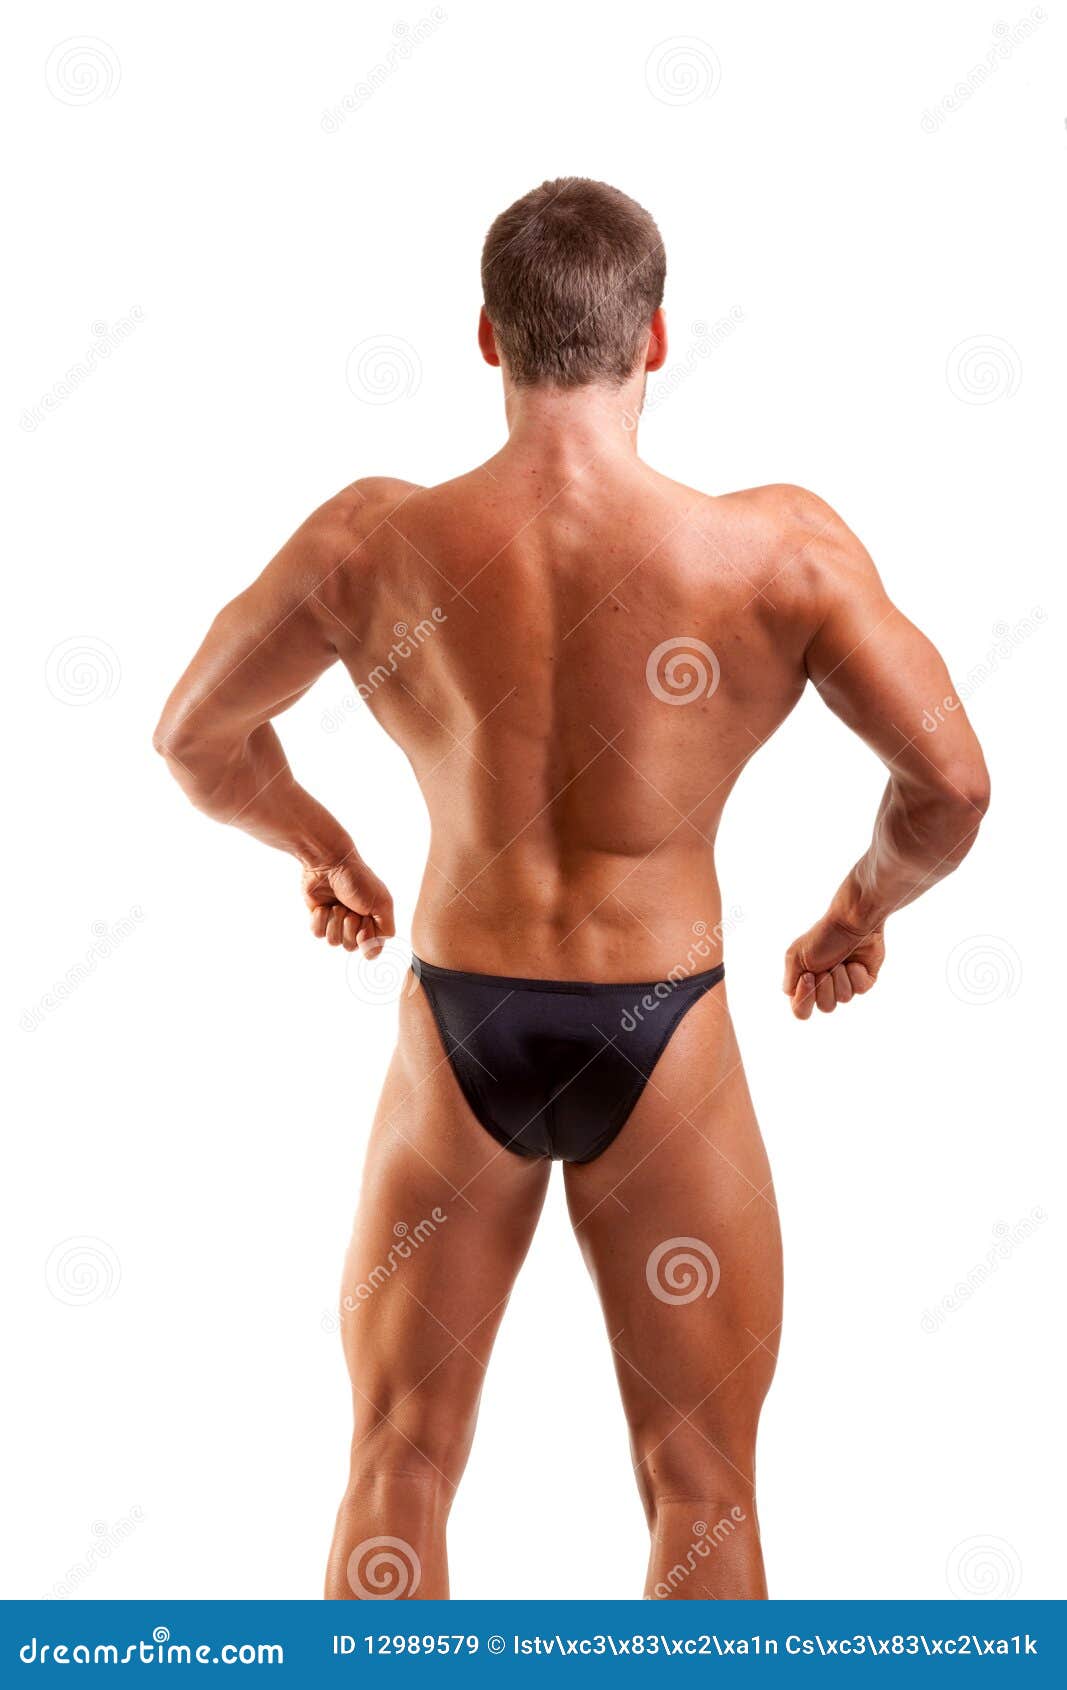 Amateur bodybuilder posing stock image